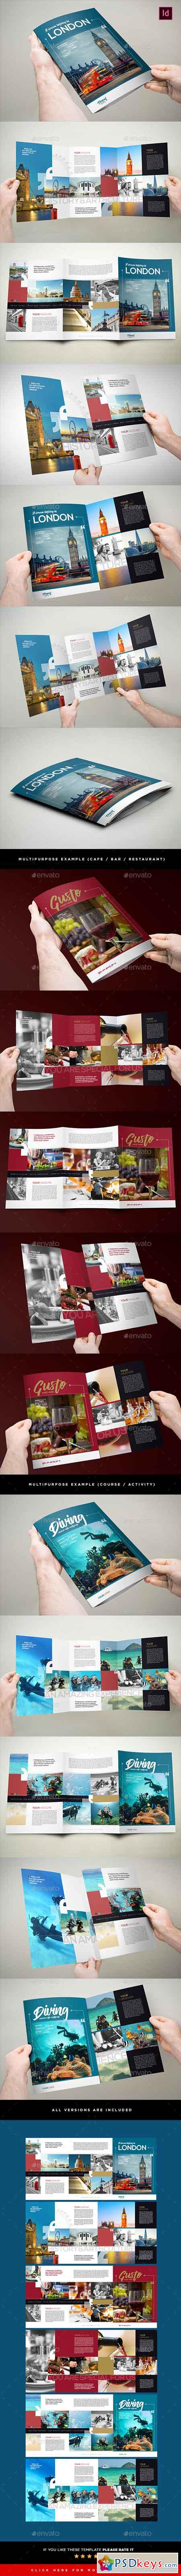 3xA4 Trifold Multipurpose Brochure Template 20138849